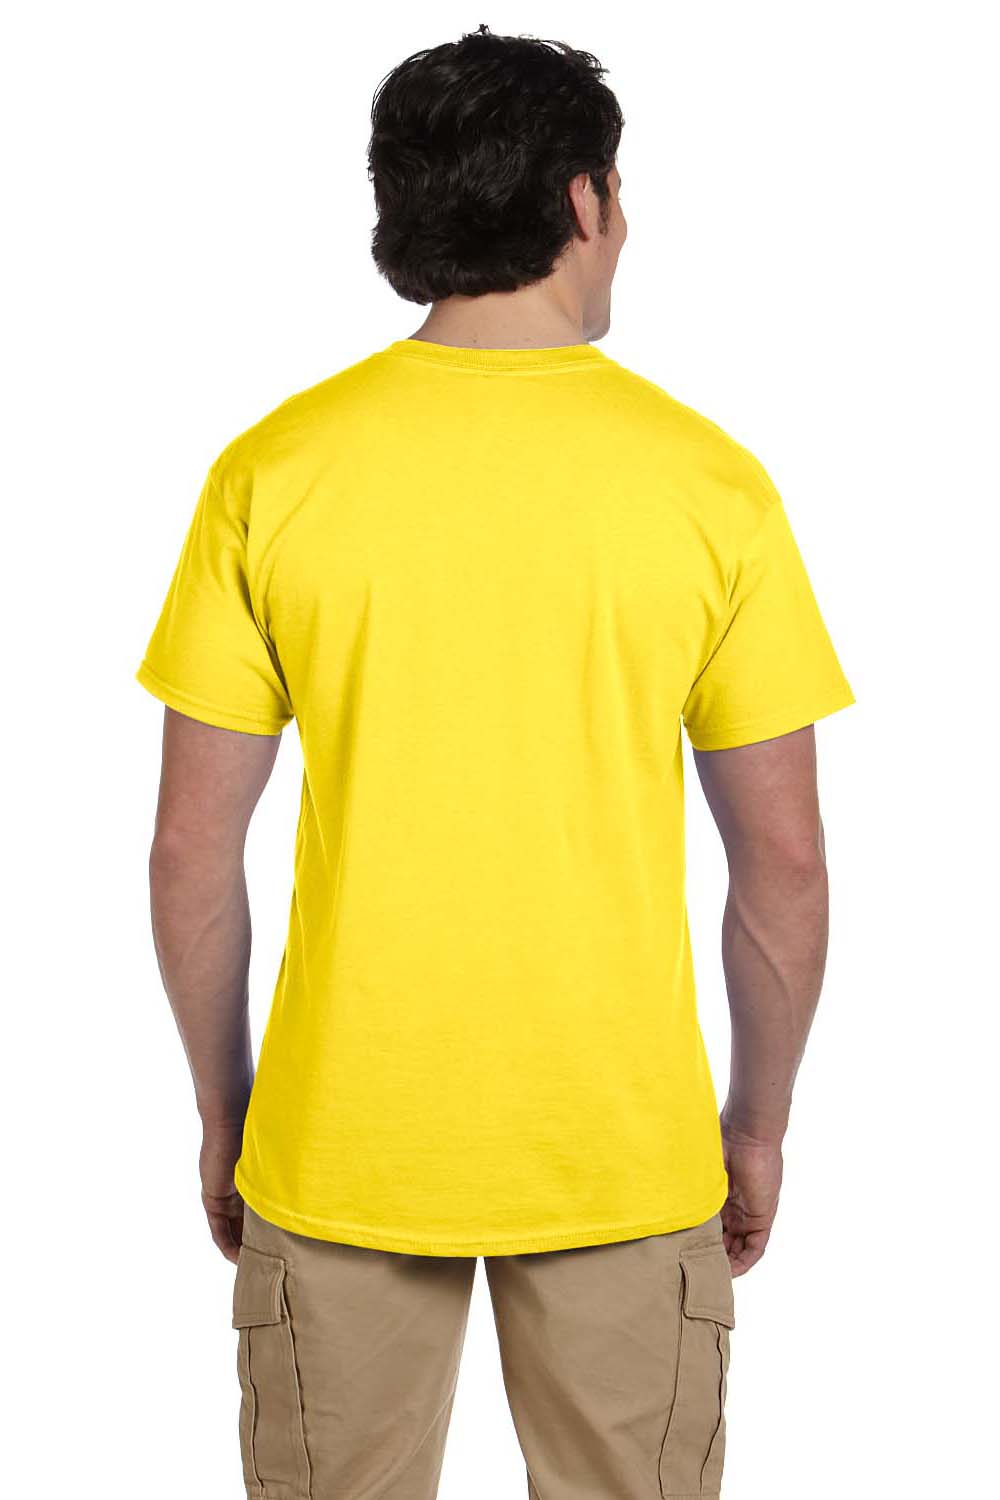 Hanes 5170 Mens EcoSmart Short Sleeve Crewneck T-Shirt Yellow Back